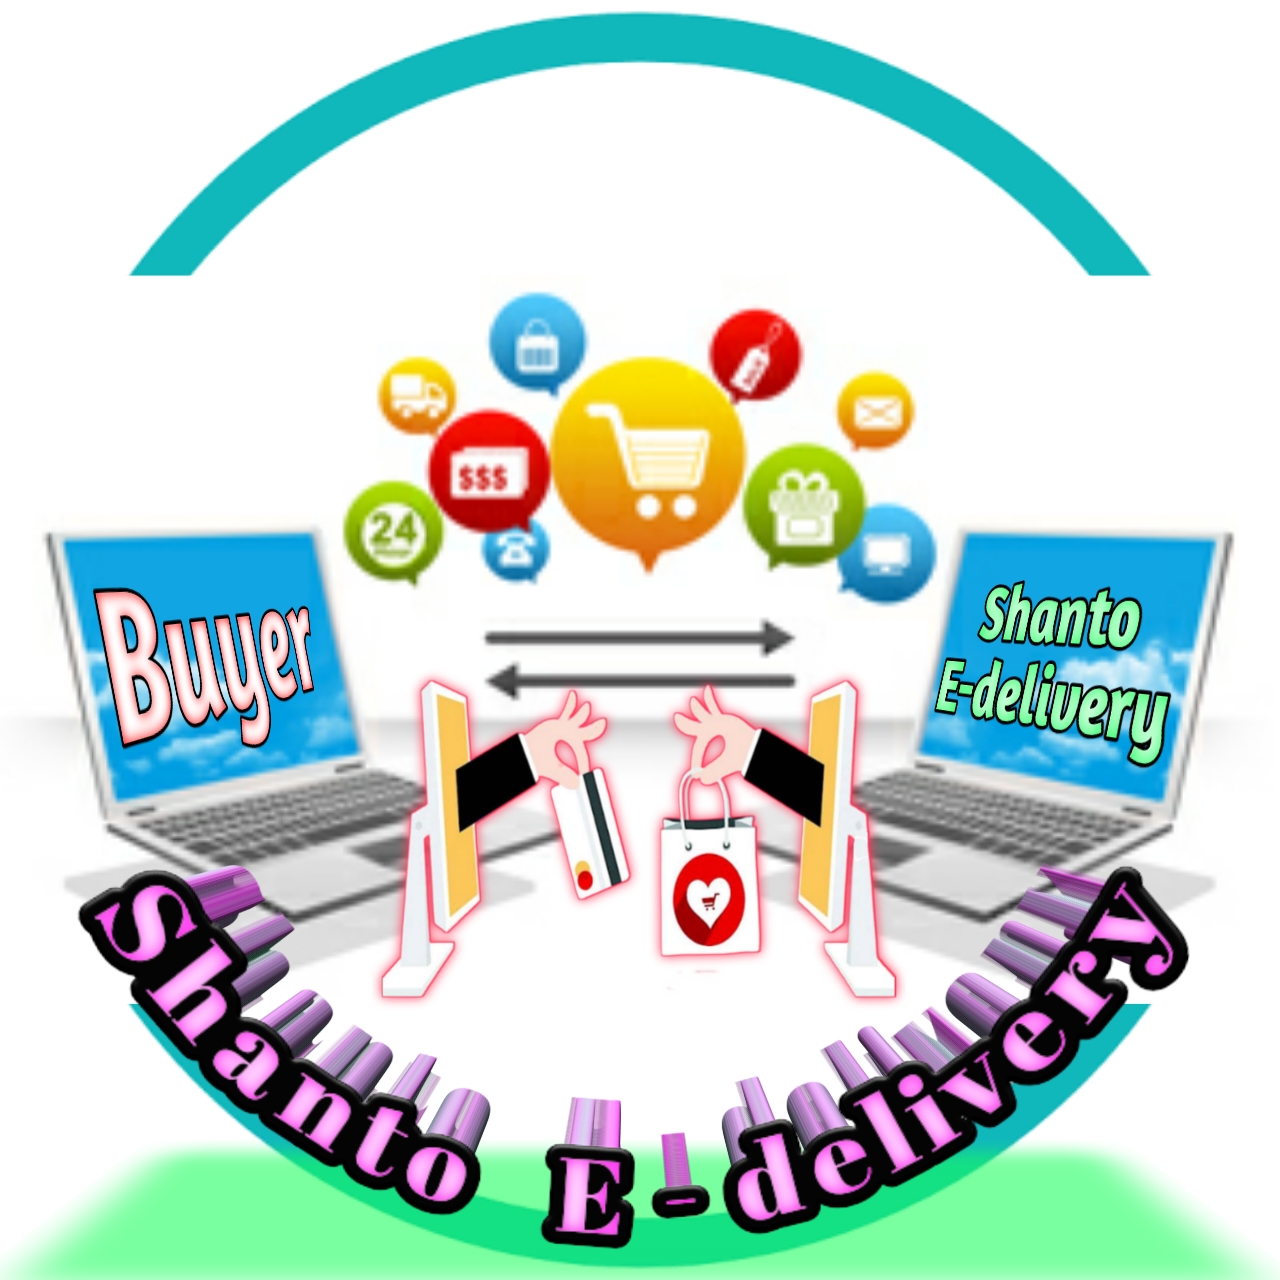 Shanto E-delivery Logo